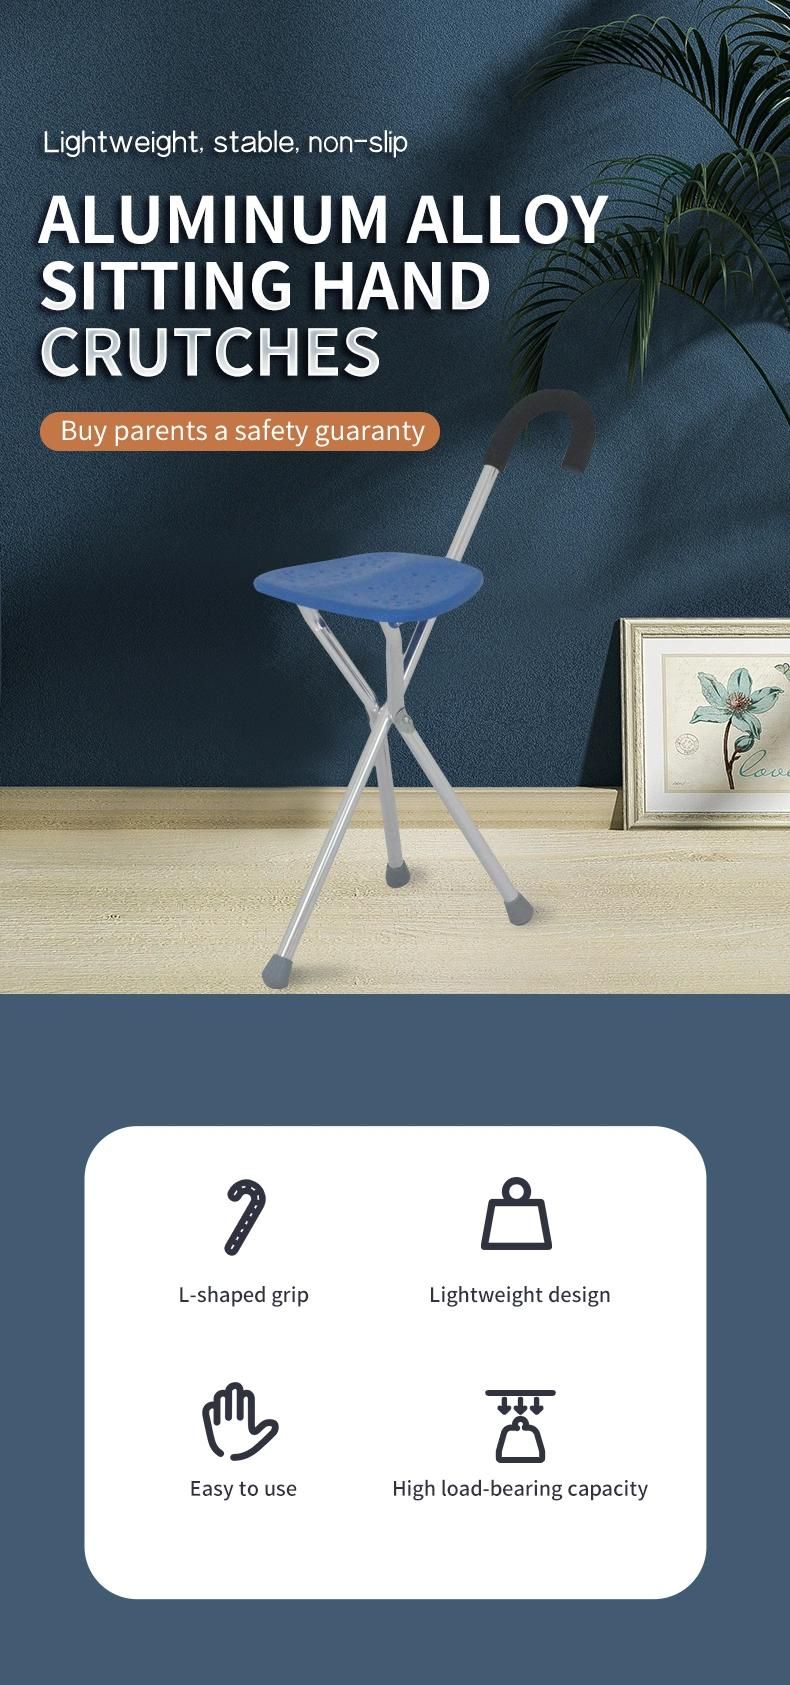 Folding Stool Walking Stick Chair Aluminum Cane for Elderly